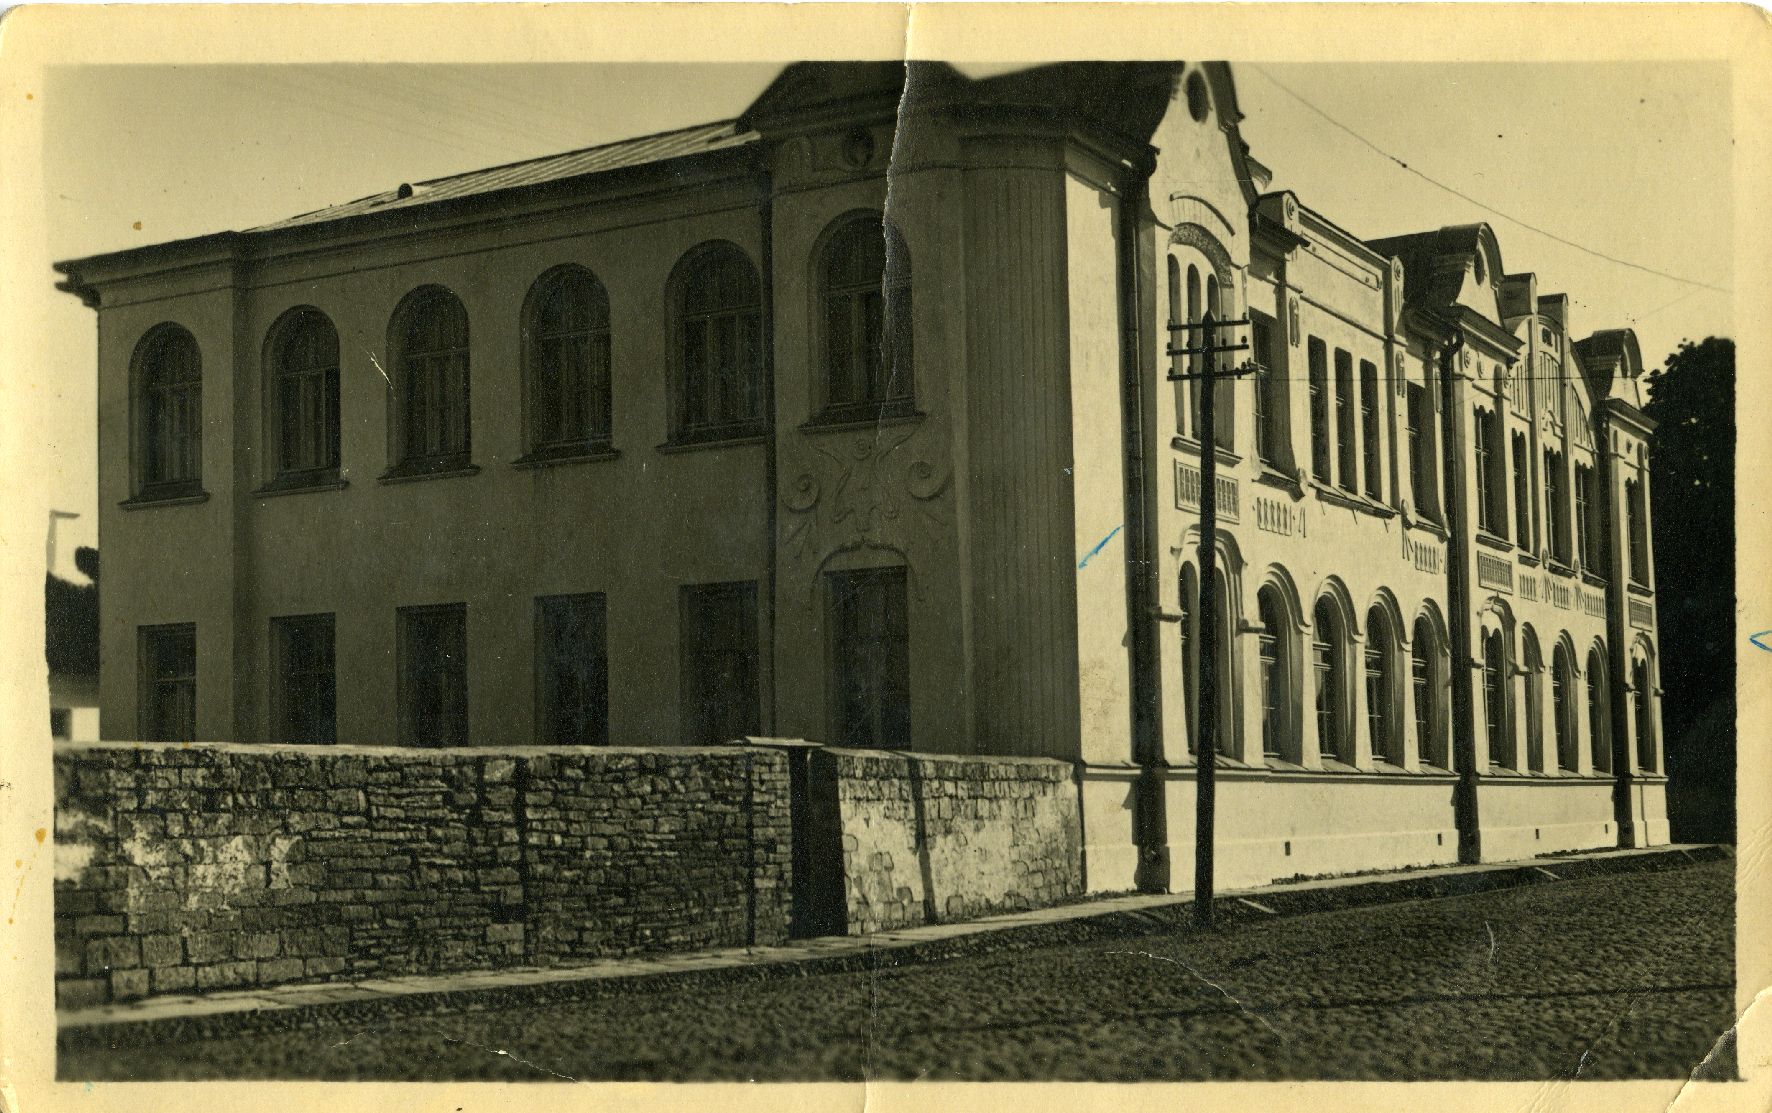 Secondary school building (Kuressaare Old Town School) on Pikal Street